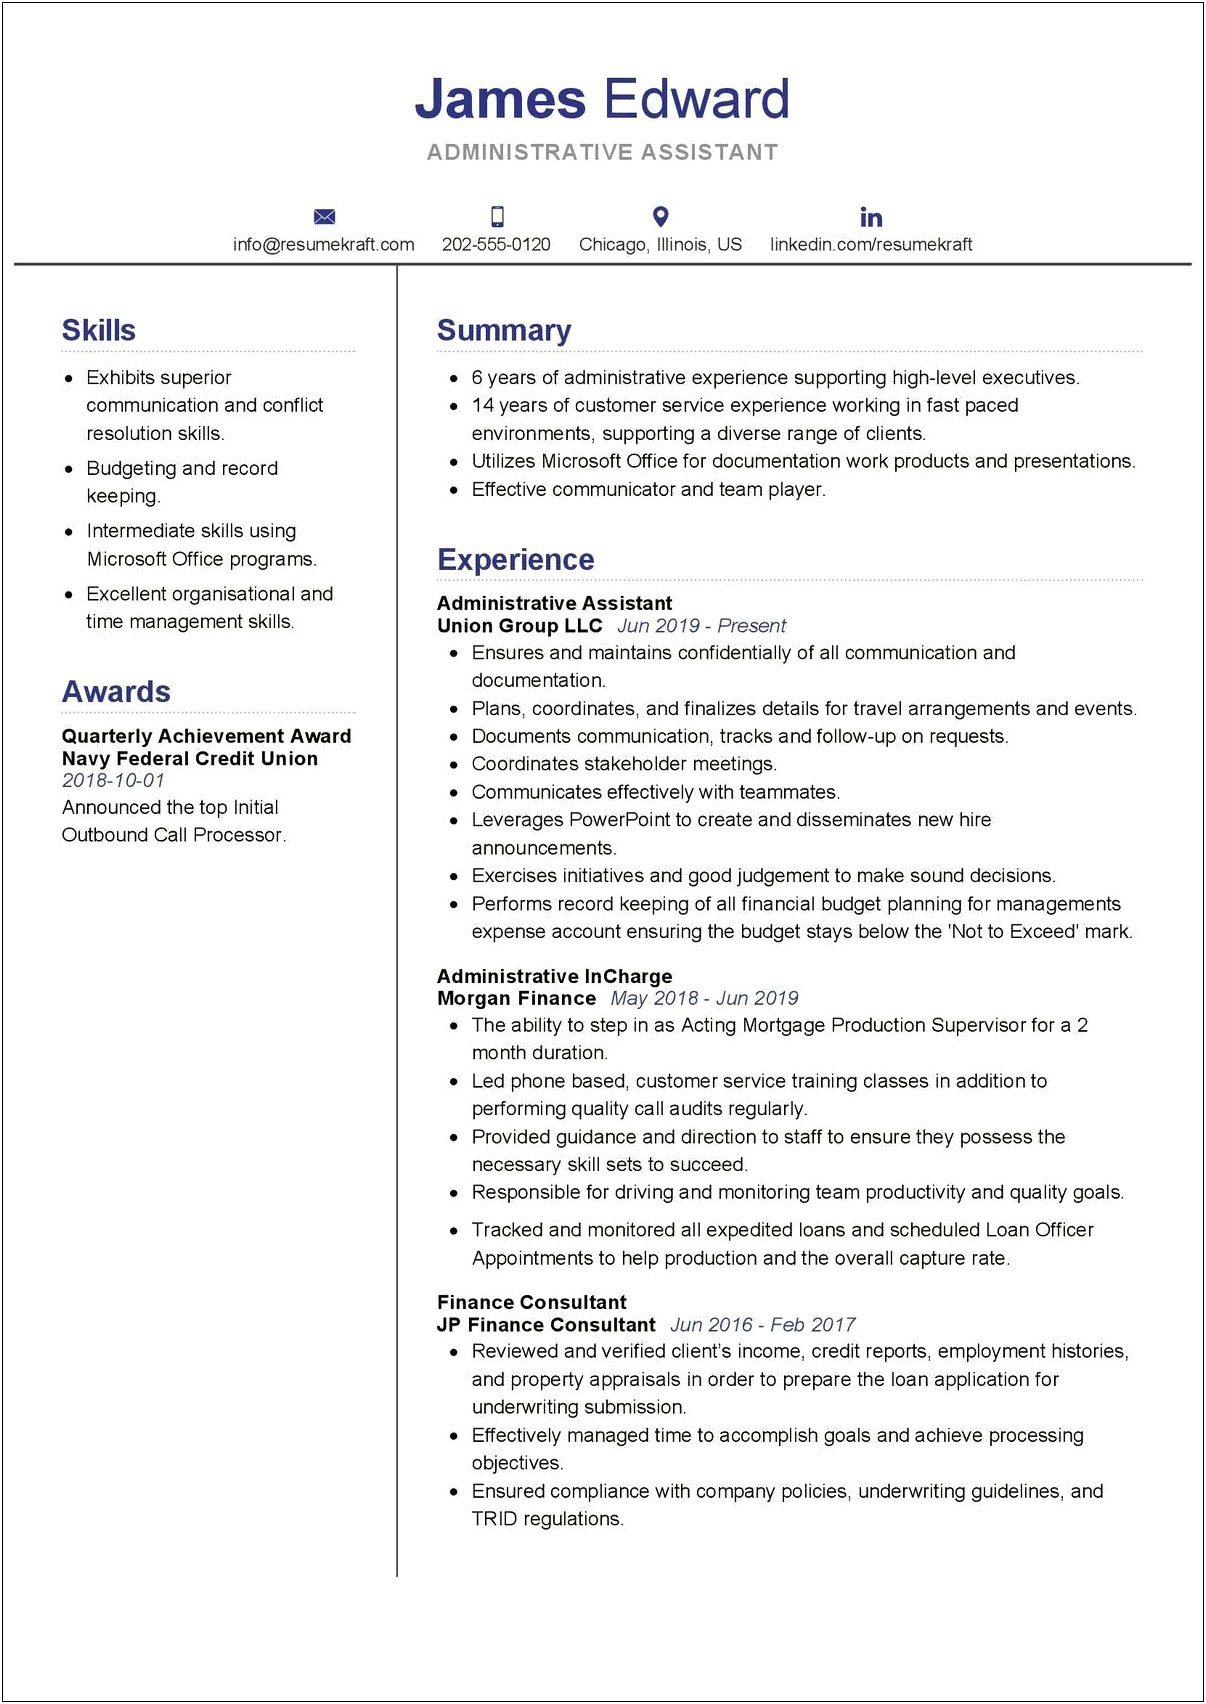 Administrative Assistant Skills List On Resume